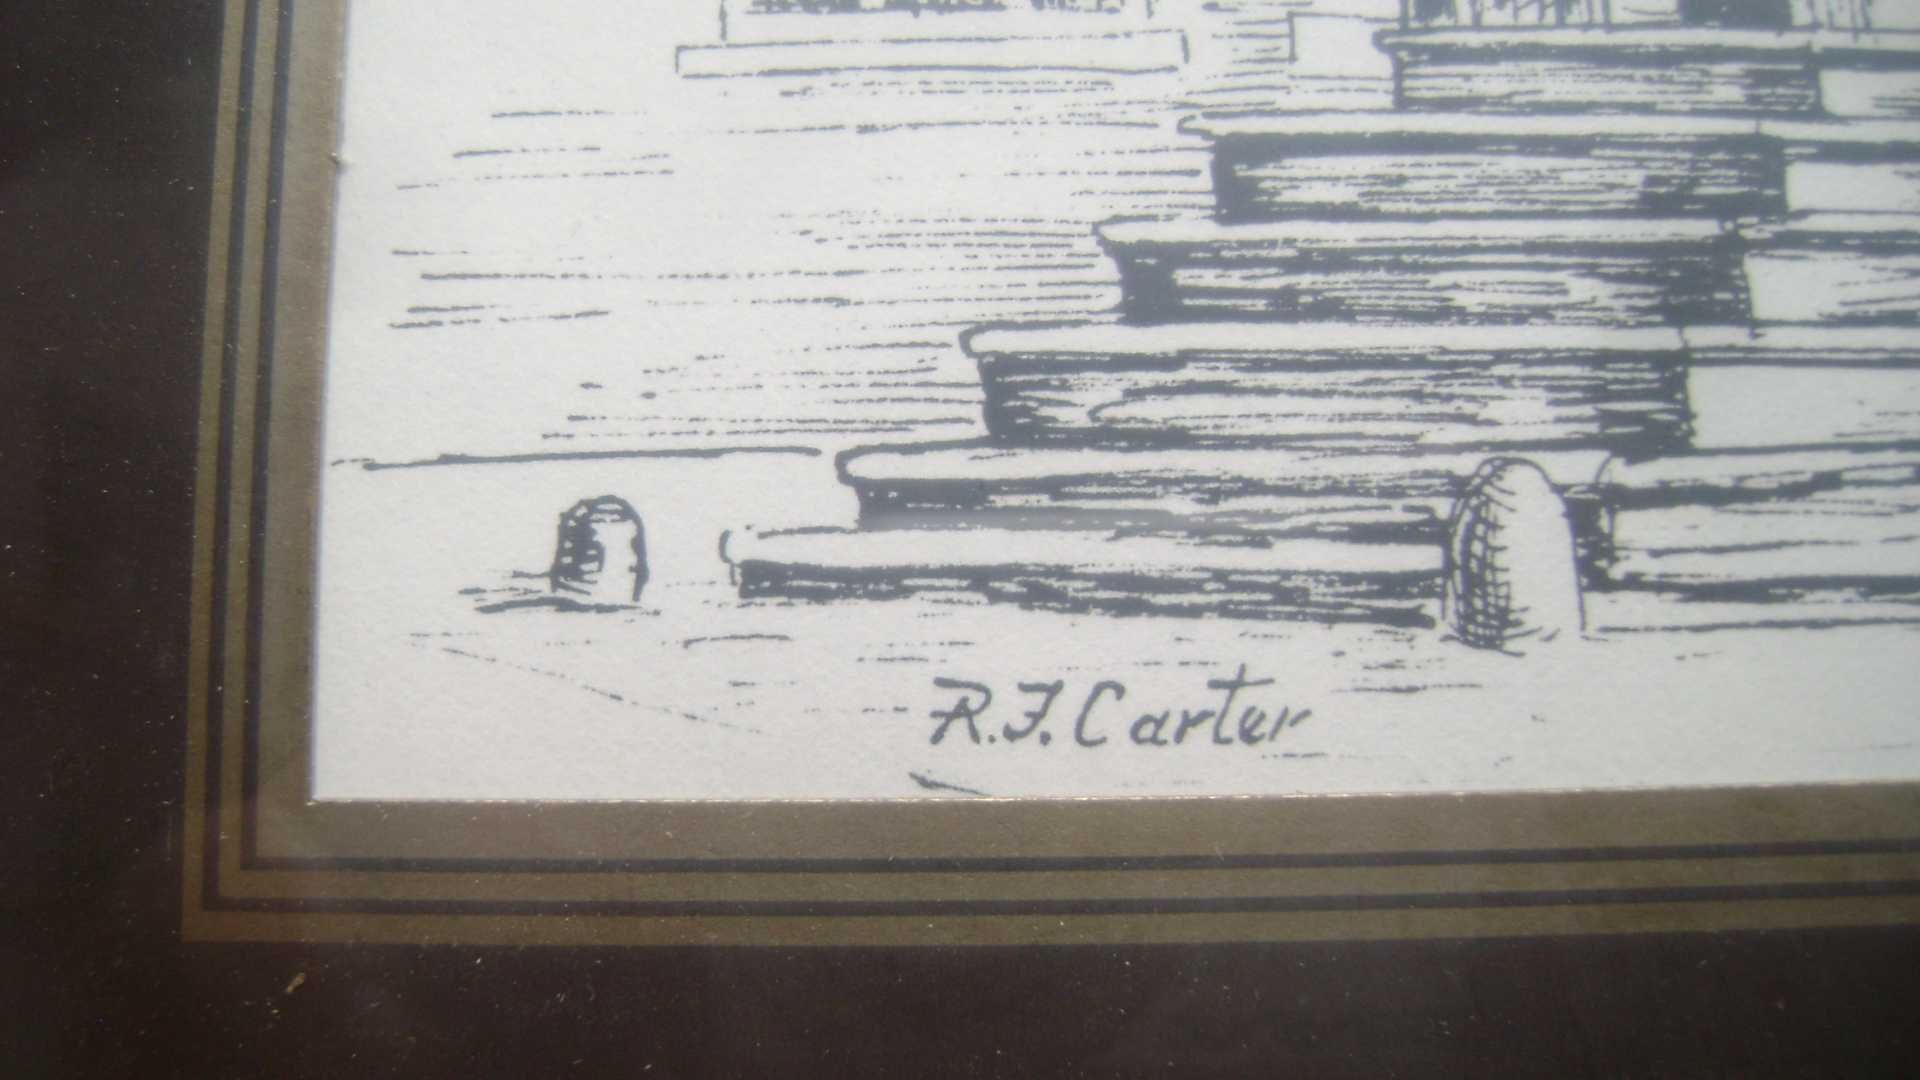 Starocie z PRL - Grafika R. J. Carter = Obraz do rozpoznania 32cmx28cm